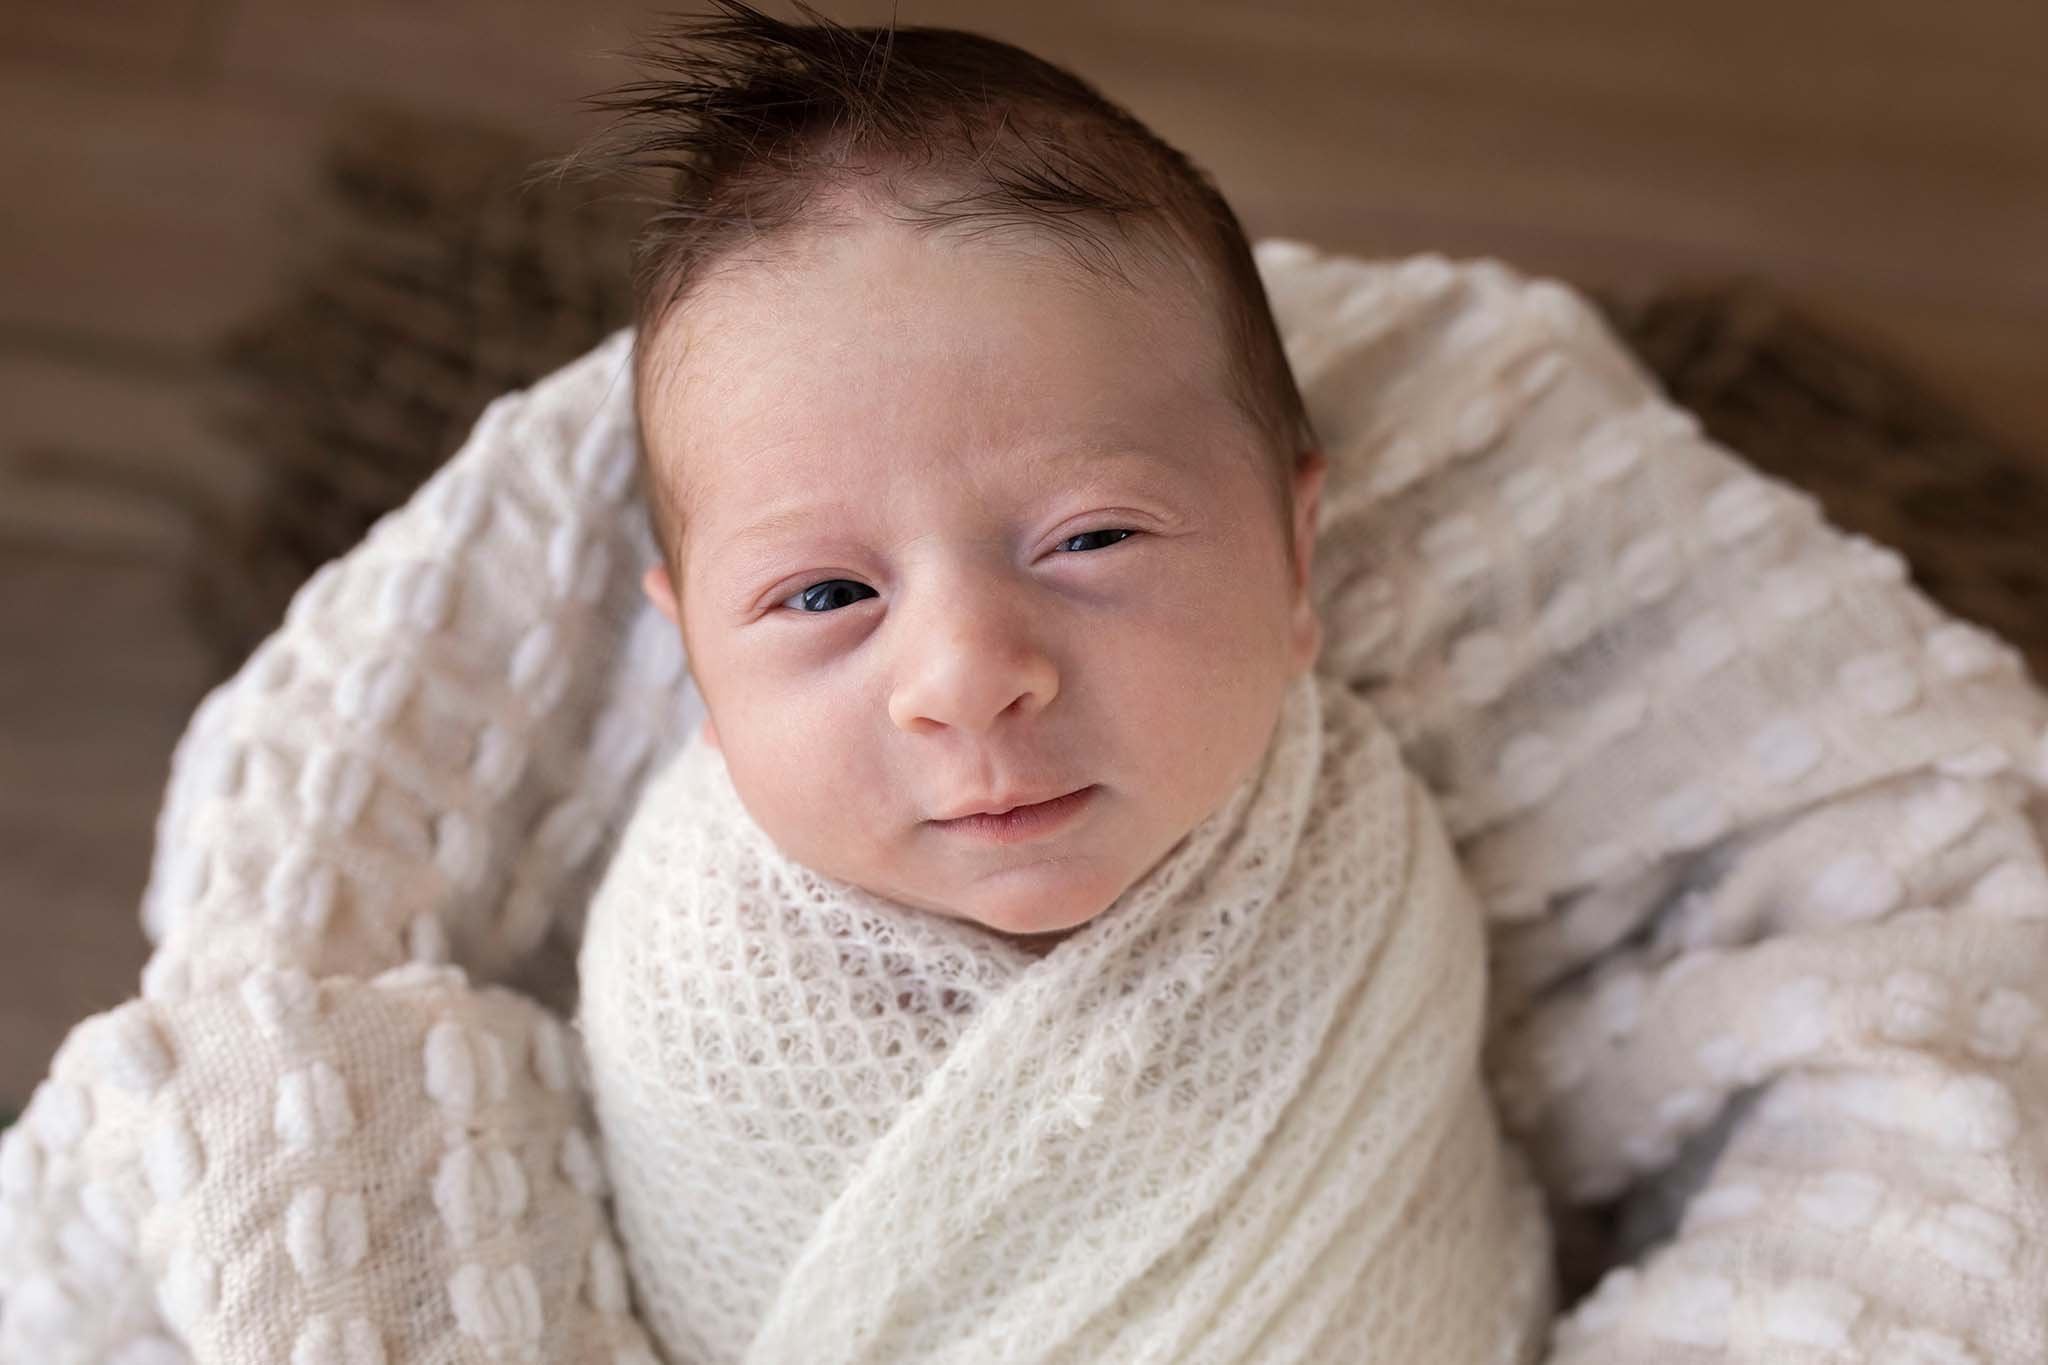 newborn baby with eyes open